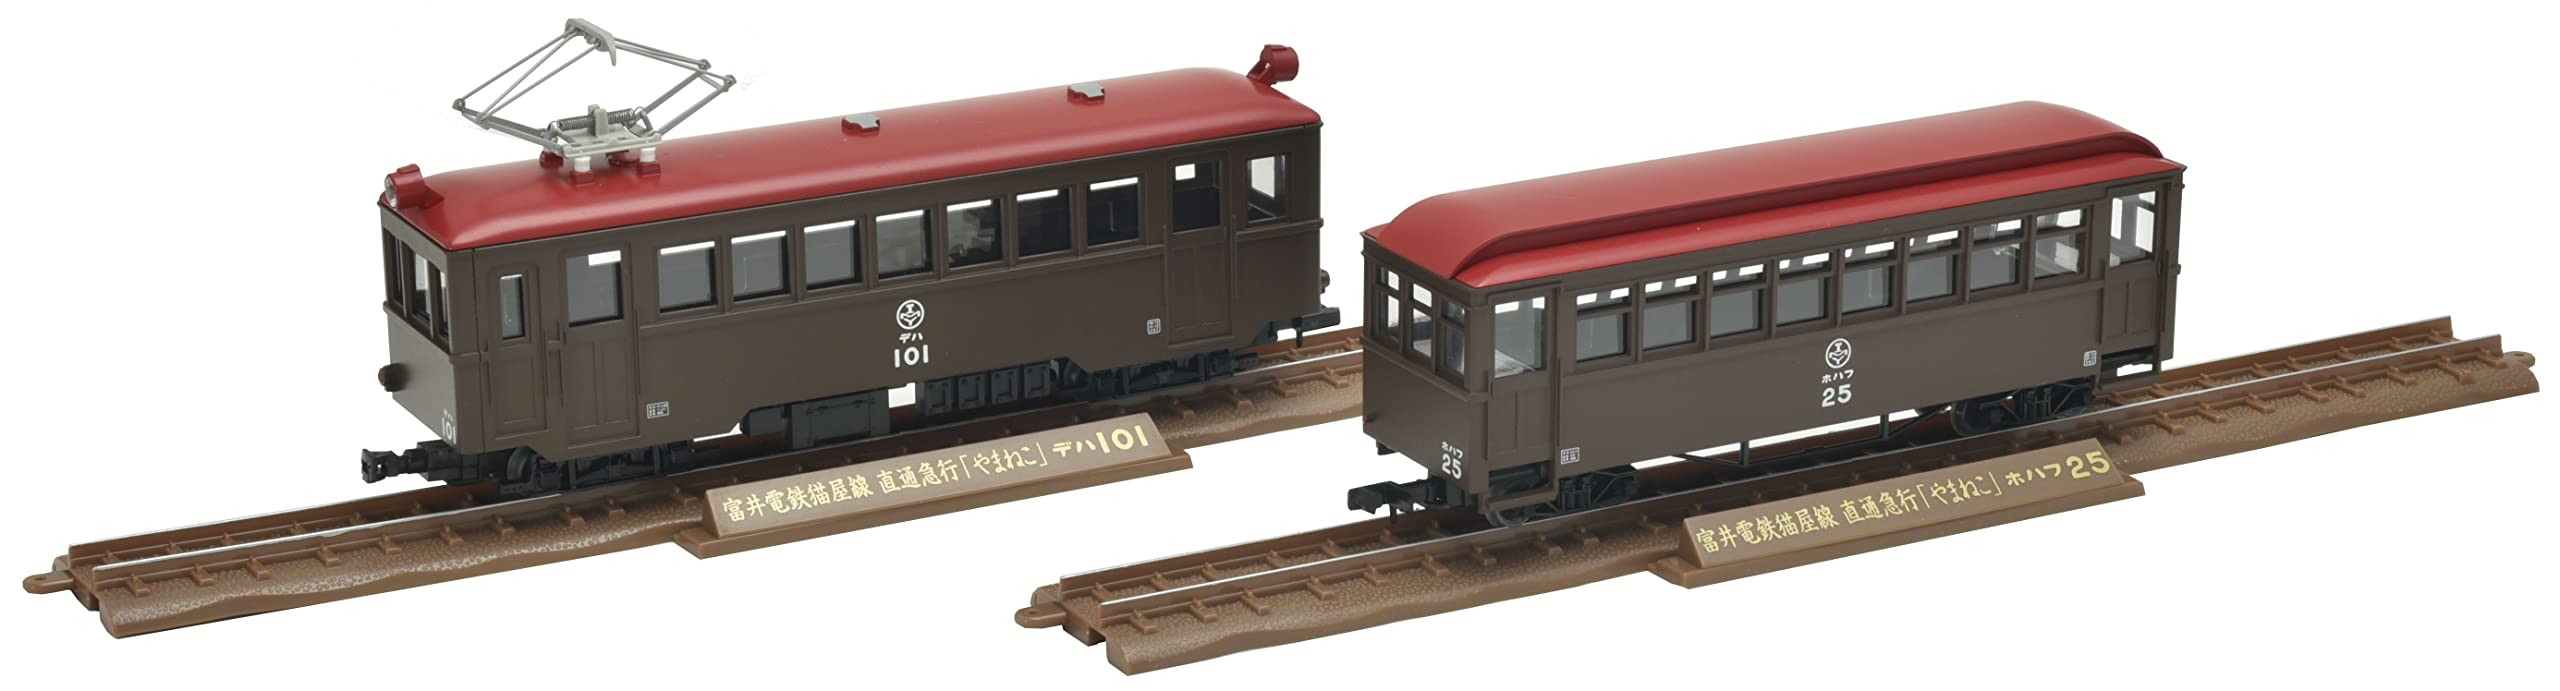 Tomytec Japan Railway Collection Iron Collection Schmalspur 80 Nekoya-Linie Yamaneko Deha 101 + Hohafu 25 2-Wagen-Set Diorama 315490